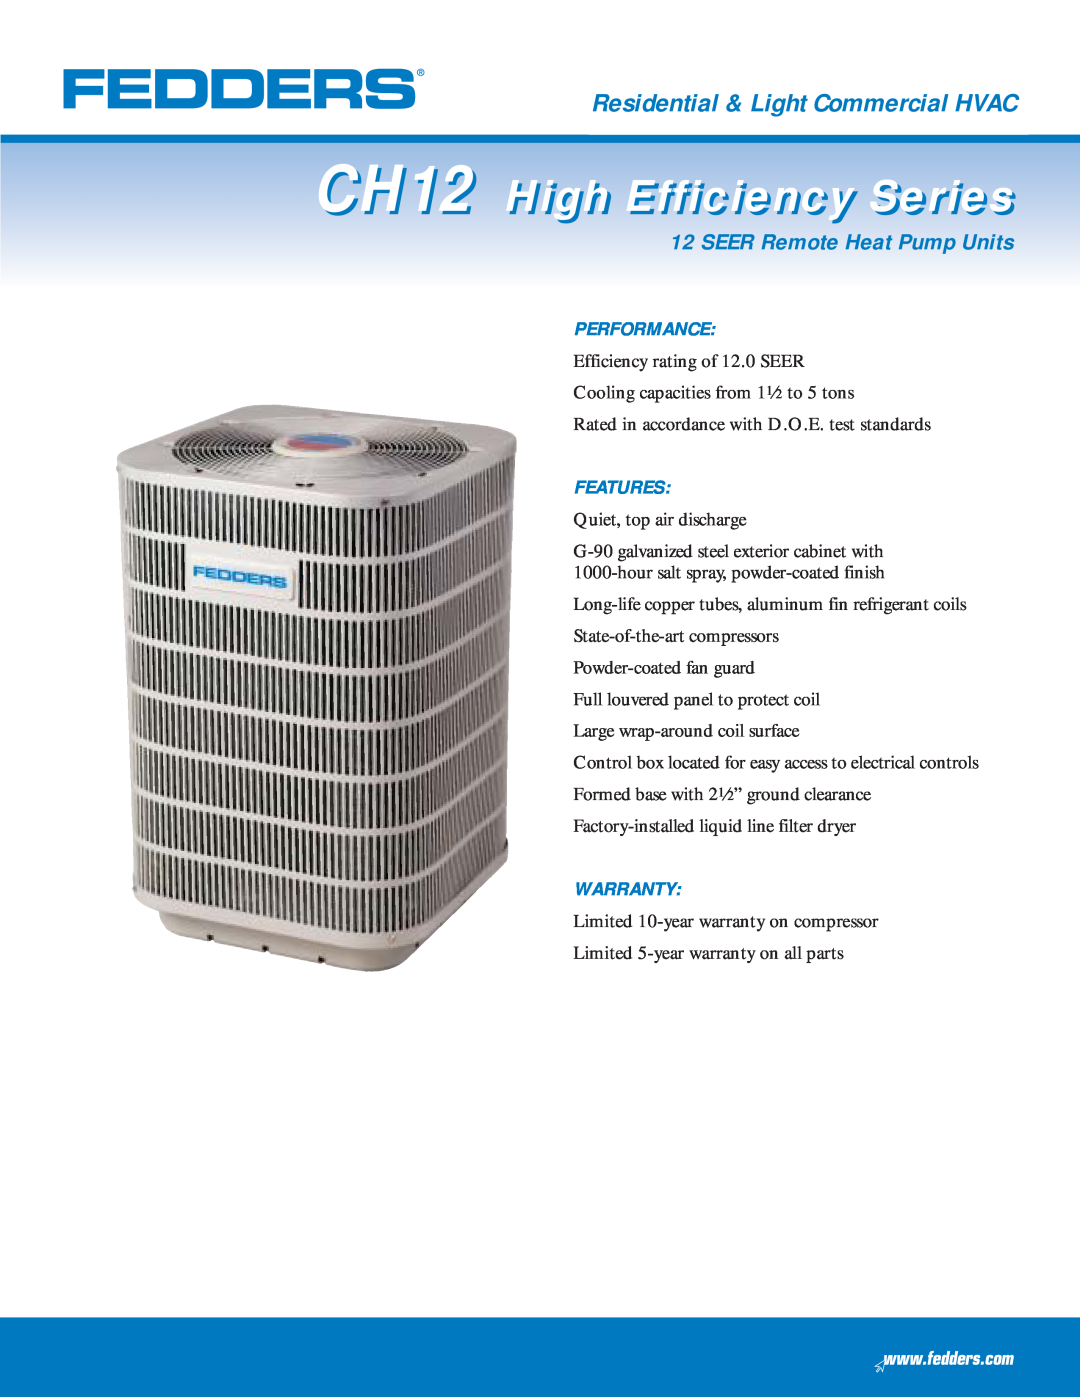 Fedders warranty CH12 High Efficiency Series, Residential & Light Commercial HVAC, SEER Remote Heat Pump Units 